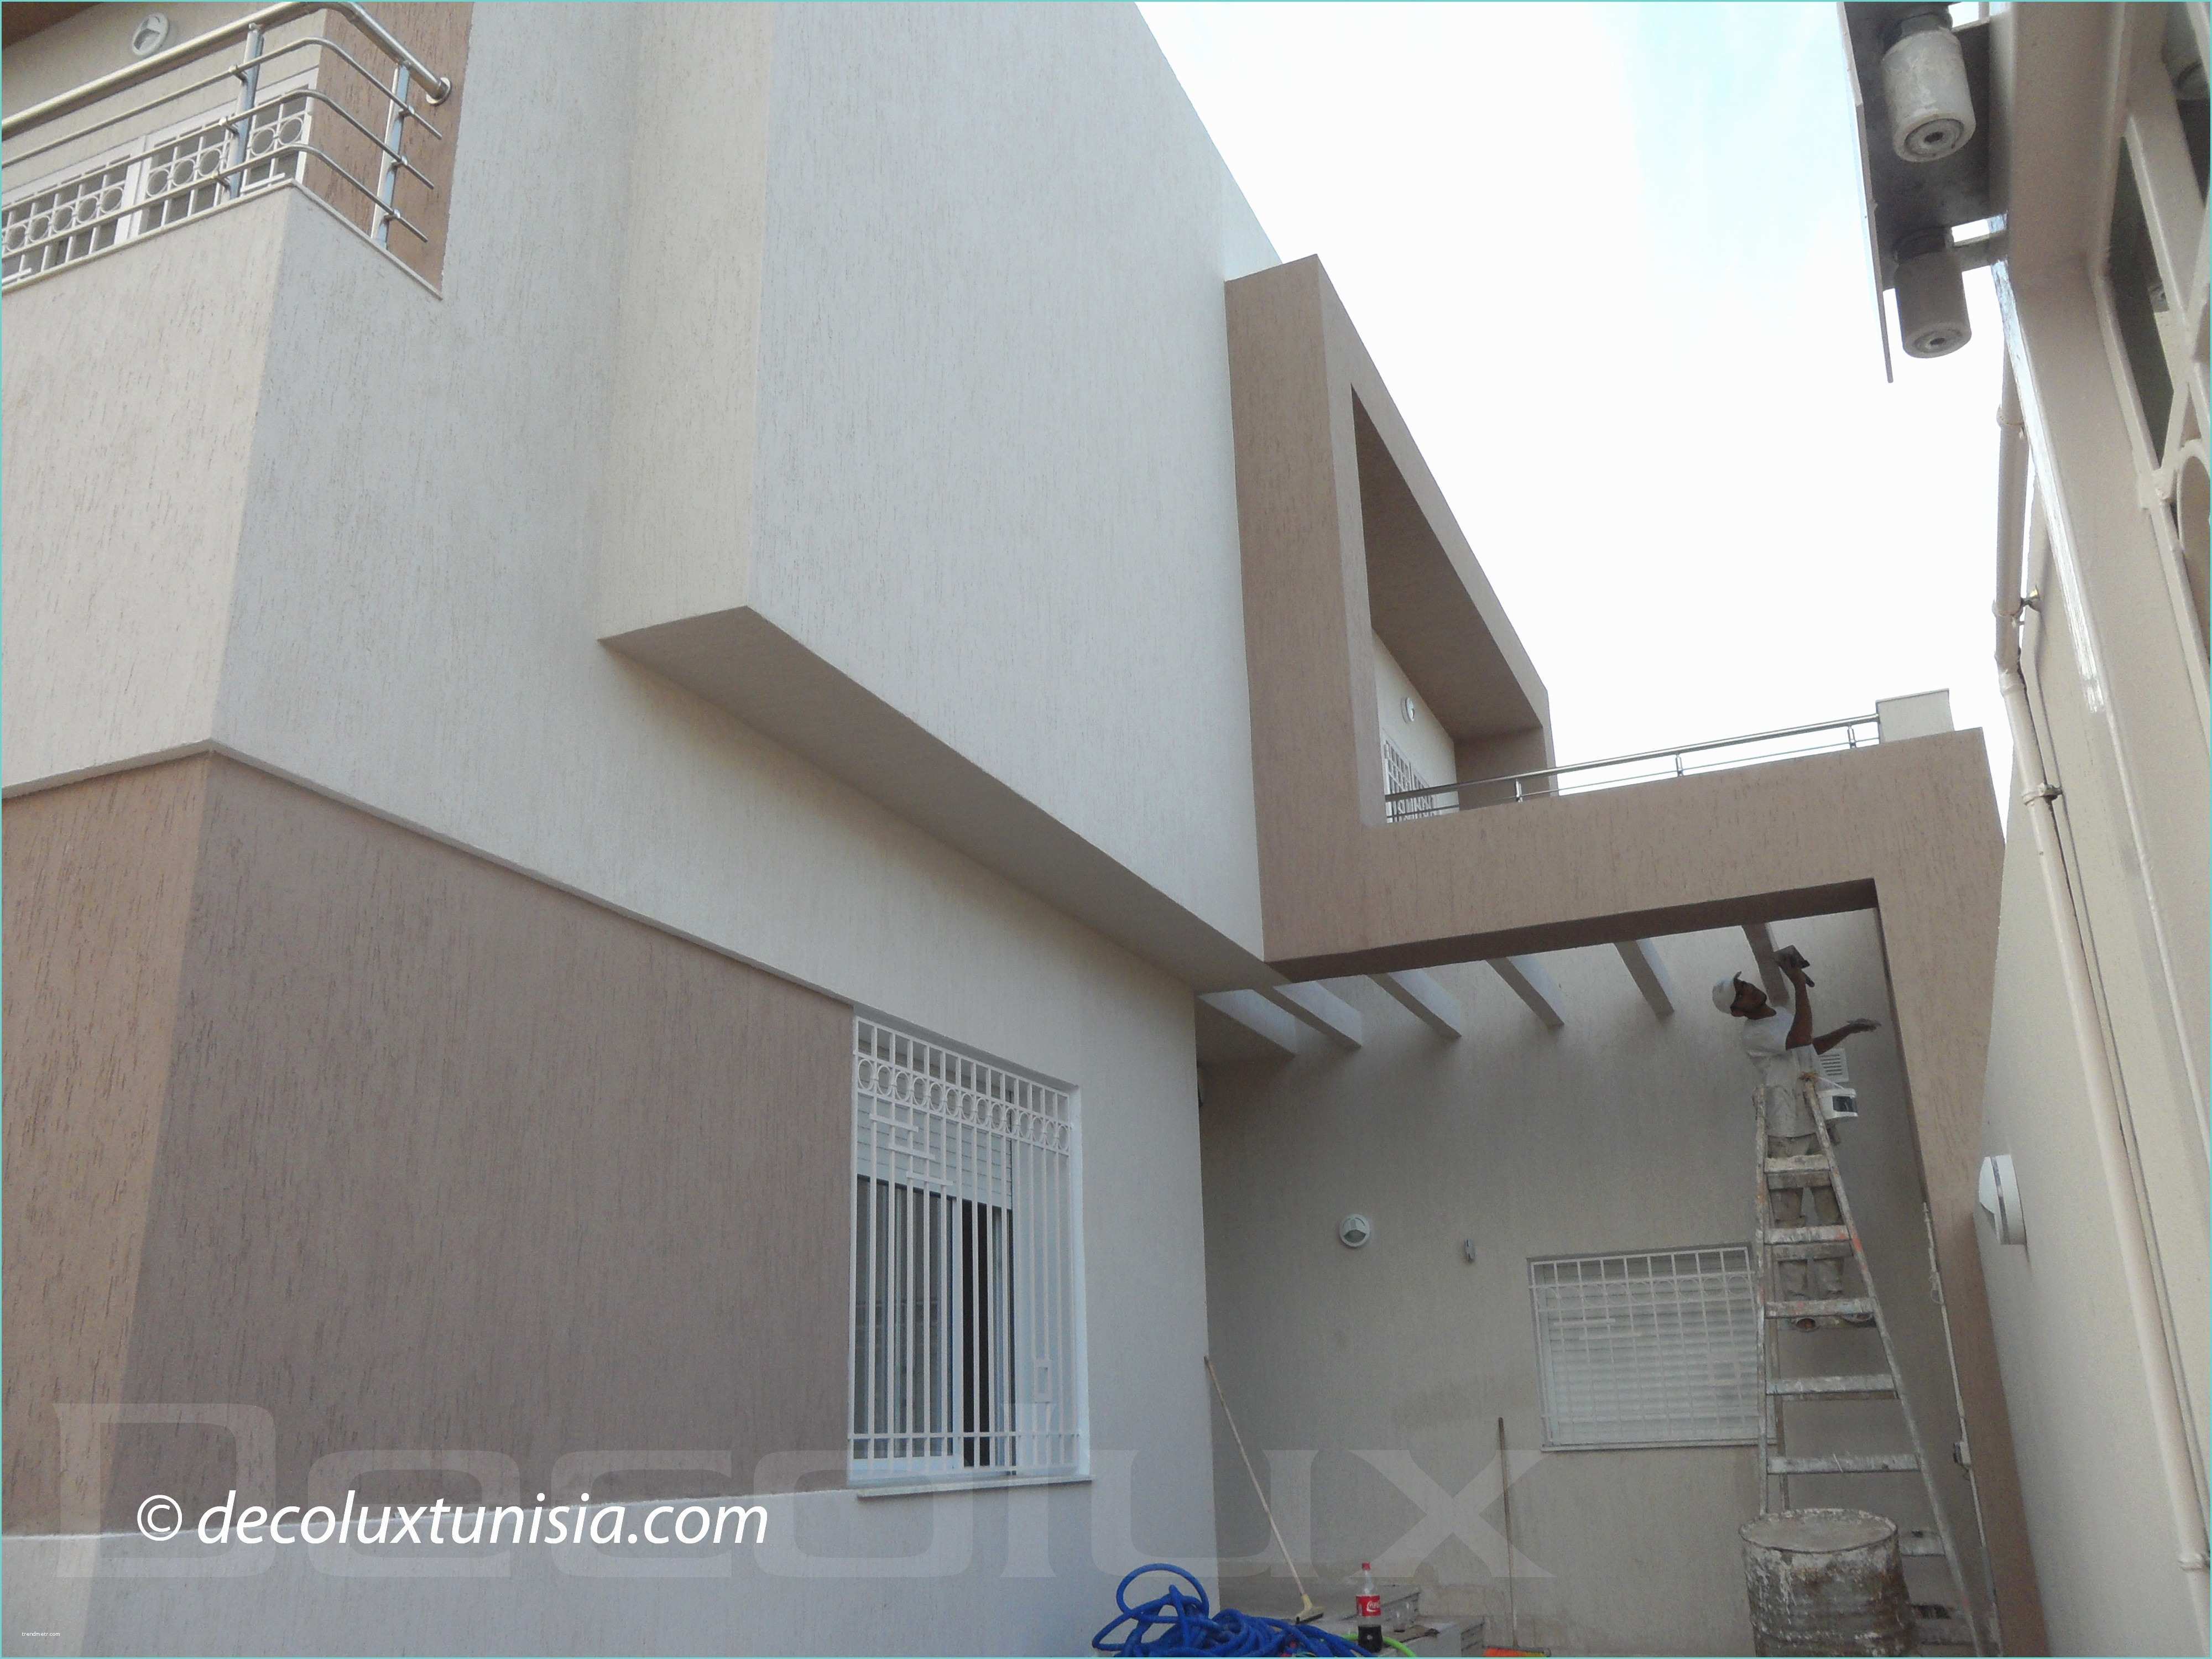 Cloture Villa Moderne Tunisie 46 Ides Dimages De Facade Cloture Maison Tunisie